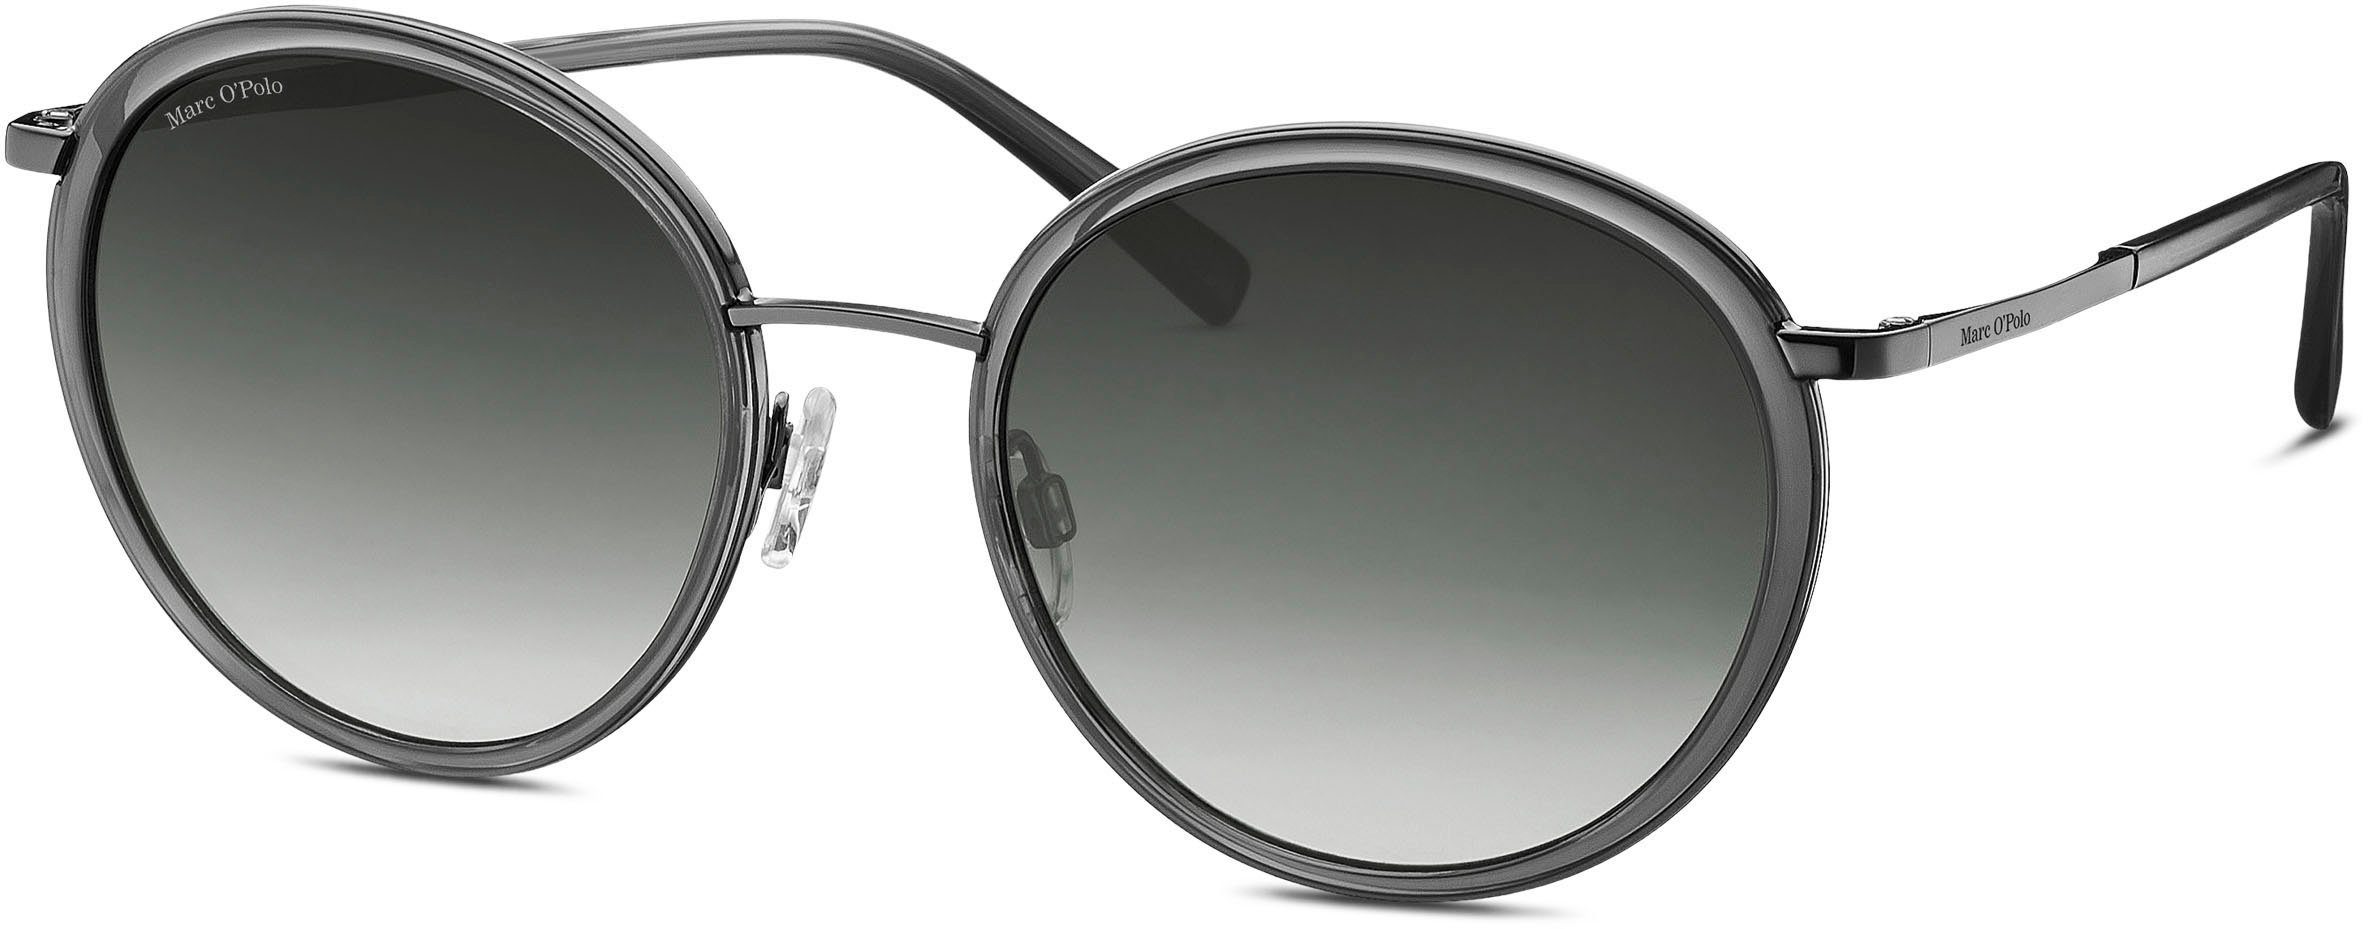 Modell 505109 Panto-Form O'Polo Marc Sonnenbrille grau